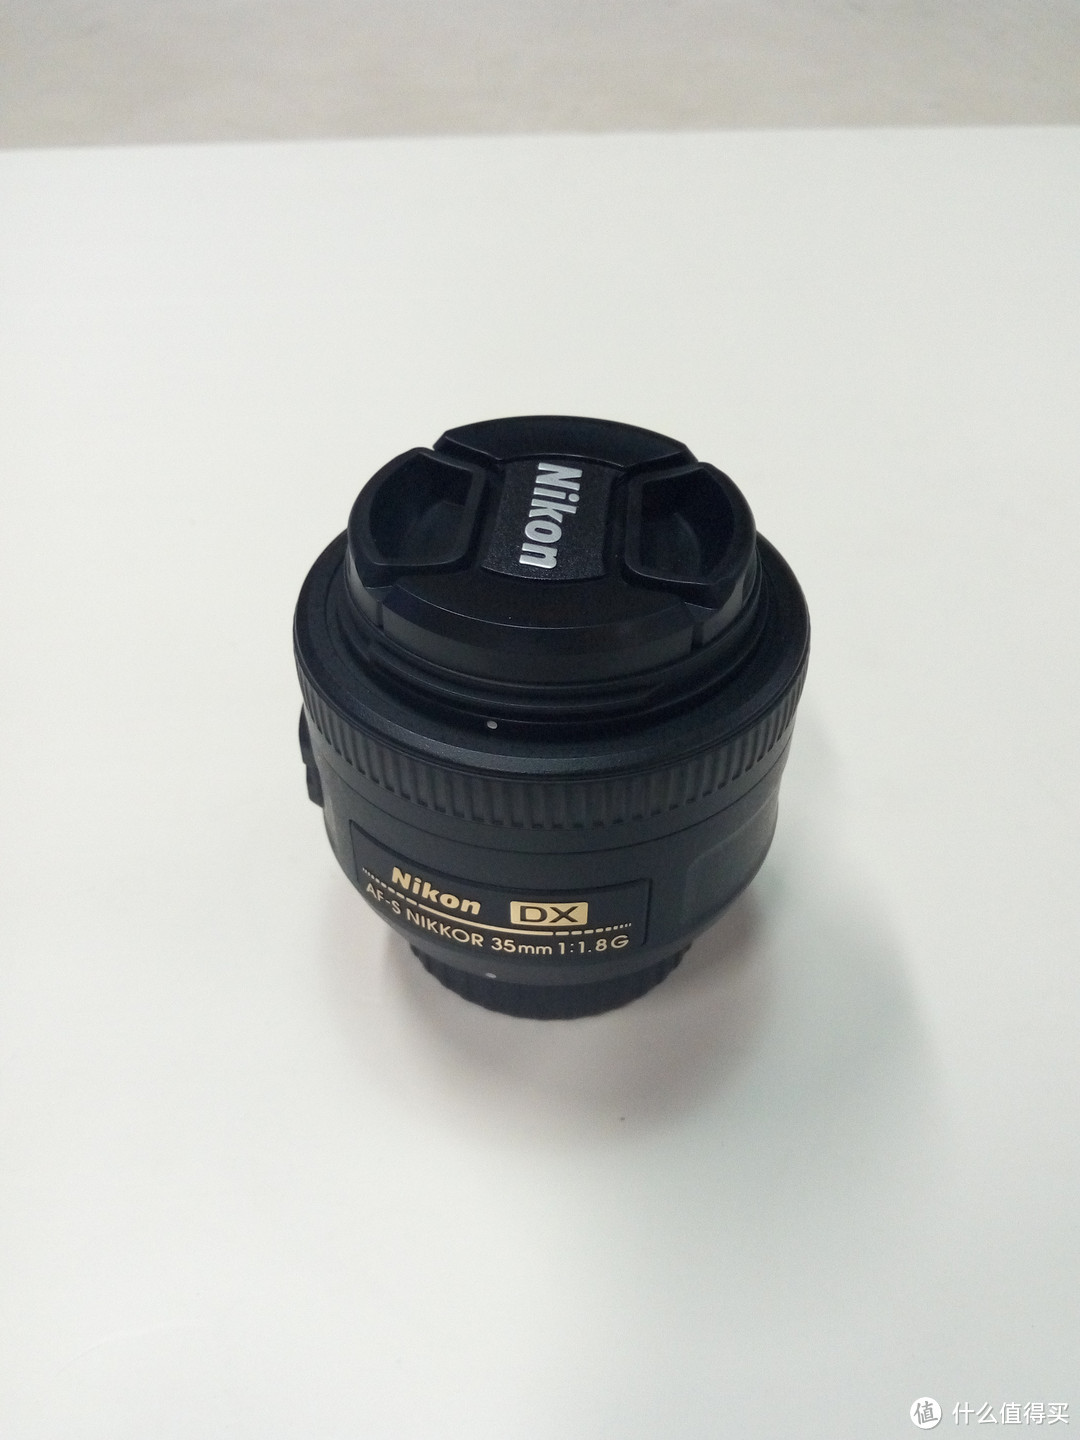 Nikon 尼康 AF-S DX 35mmf/1.8G标准镜头 开箱晒单